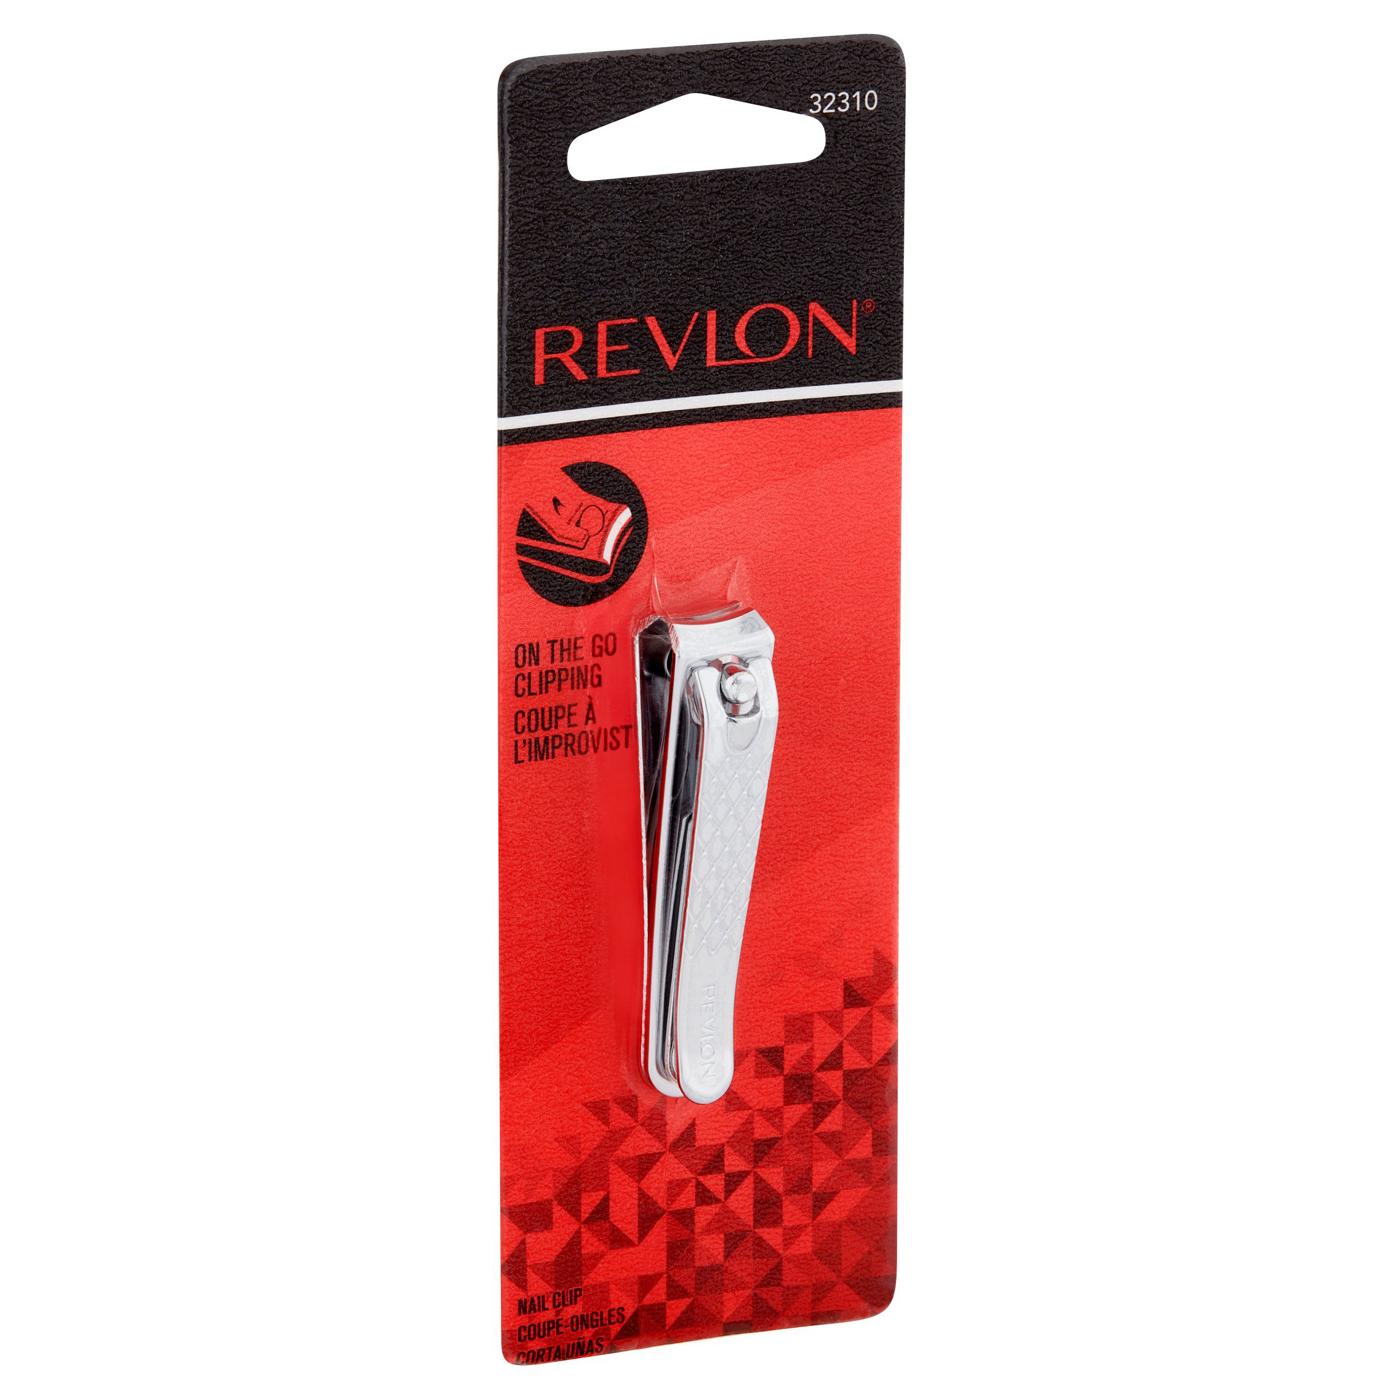 Revlon Compact Nail Clip; image 1 of 5